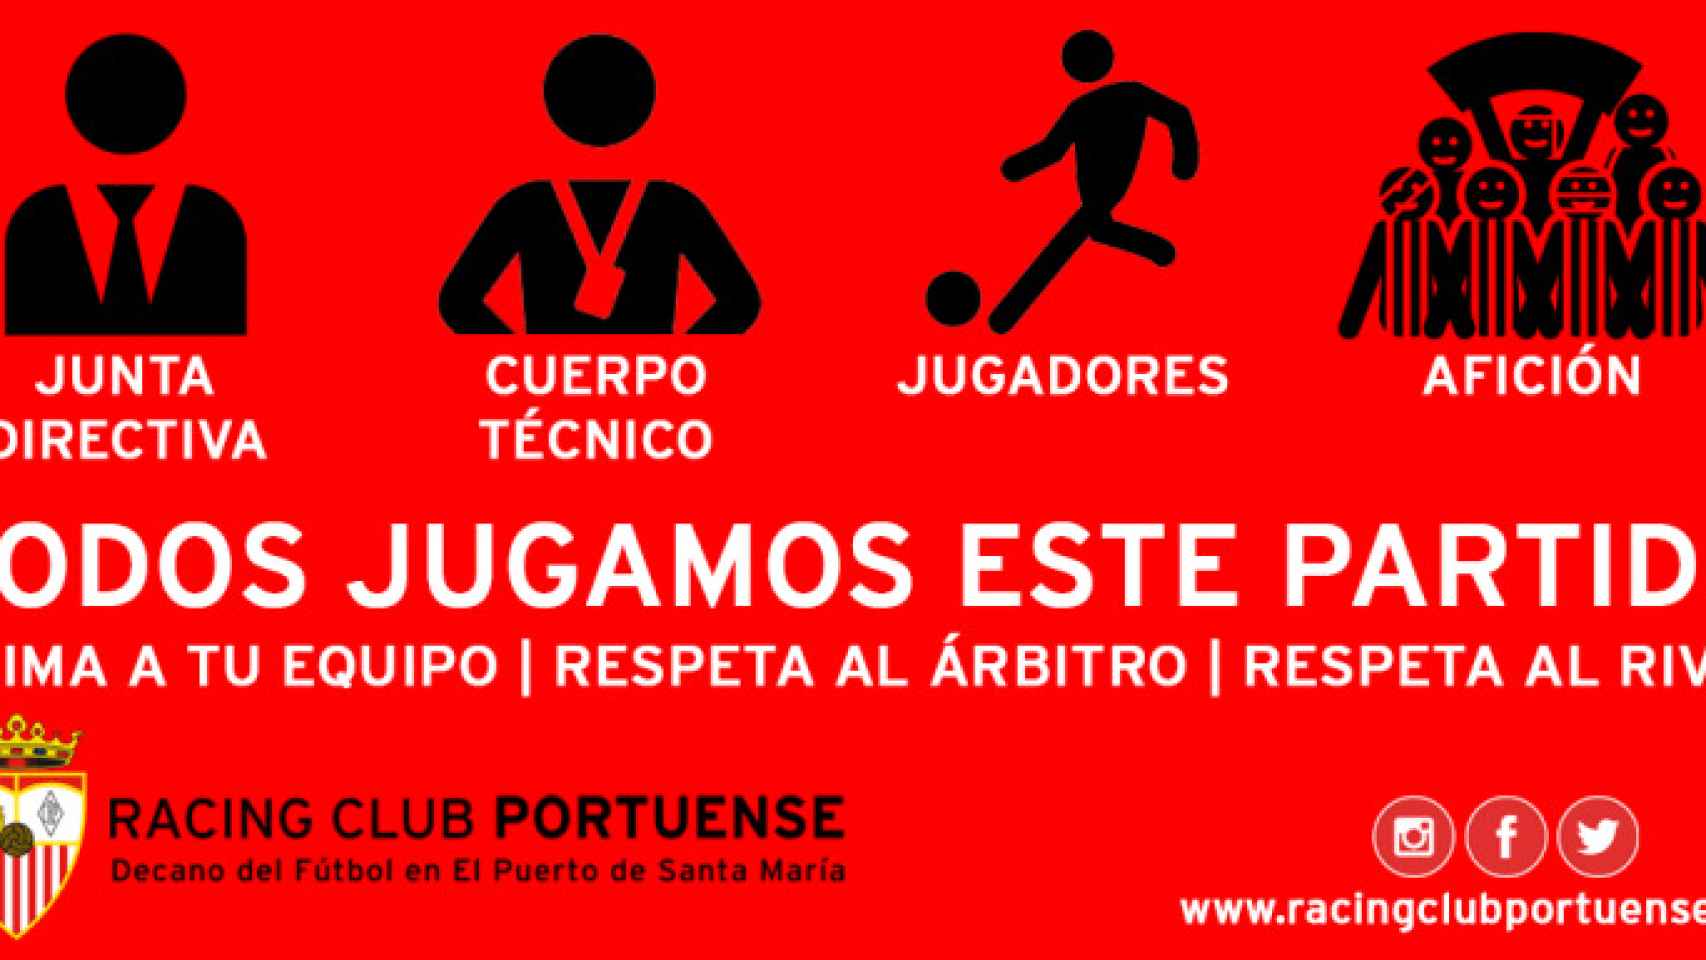 Nueva campaña del Racing Club Portuense. Foto: racingclubportuense.com